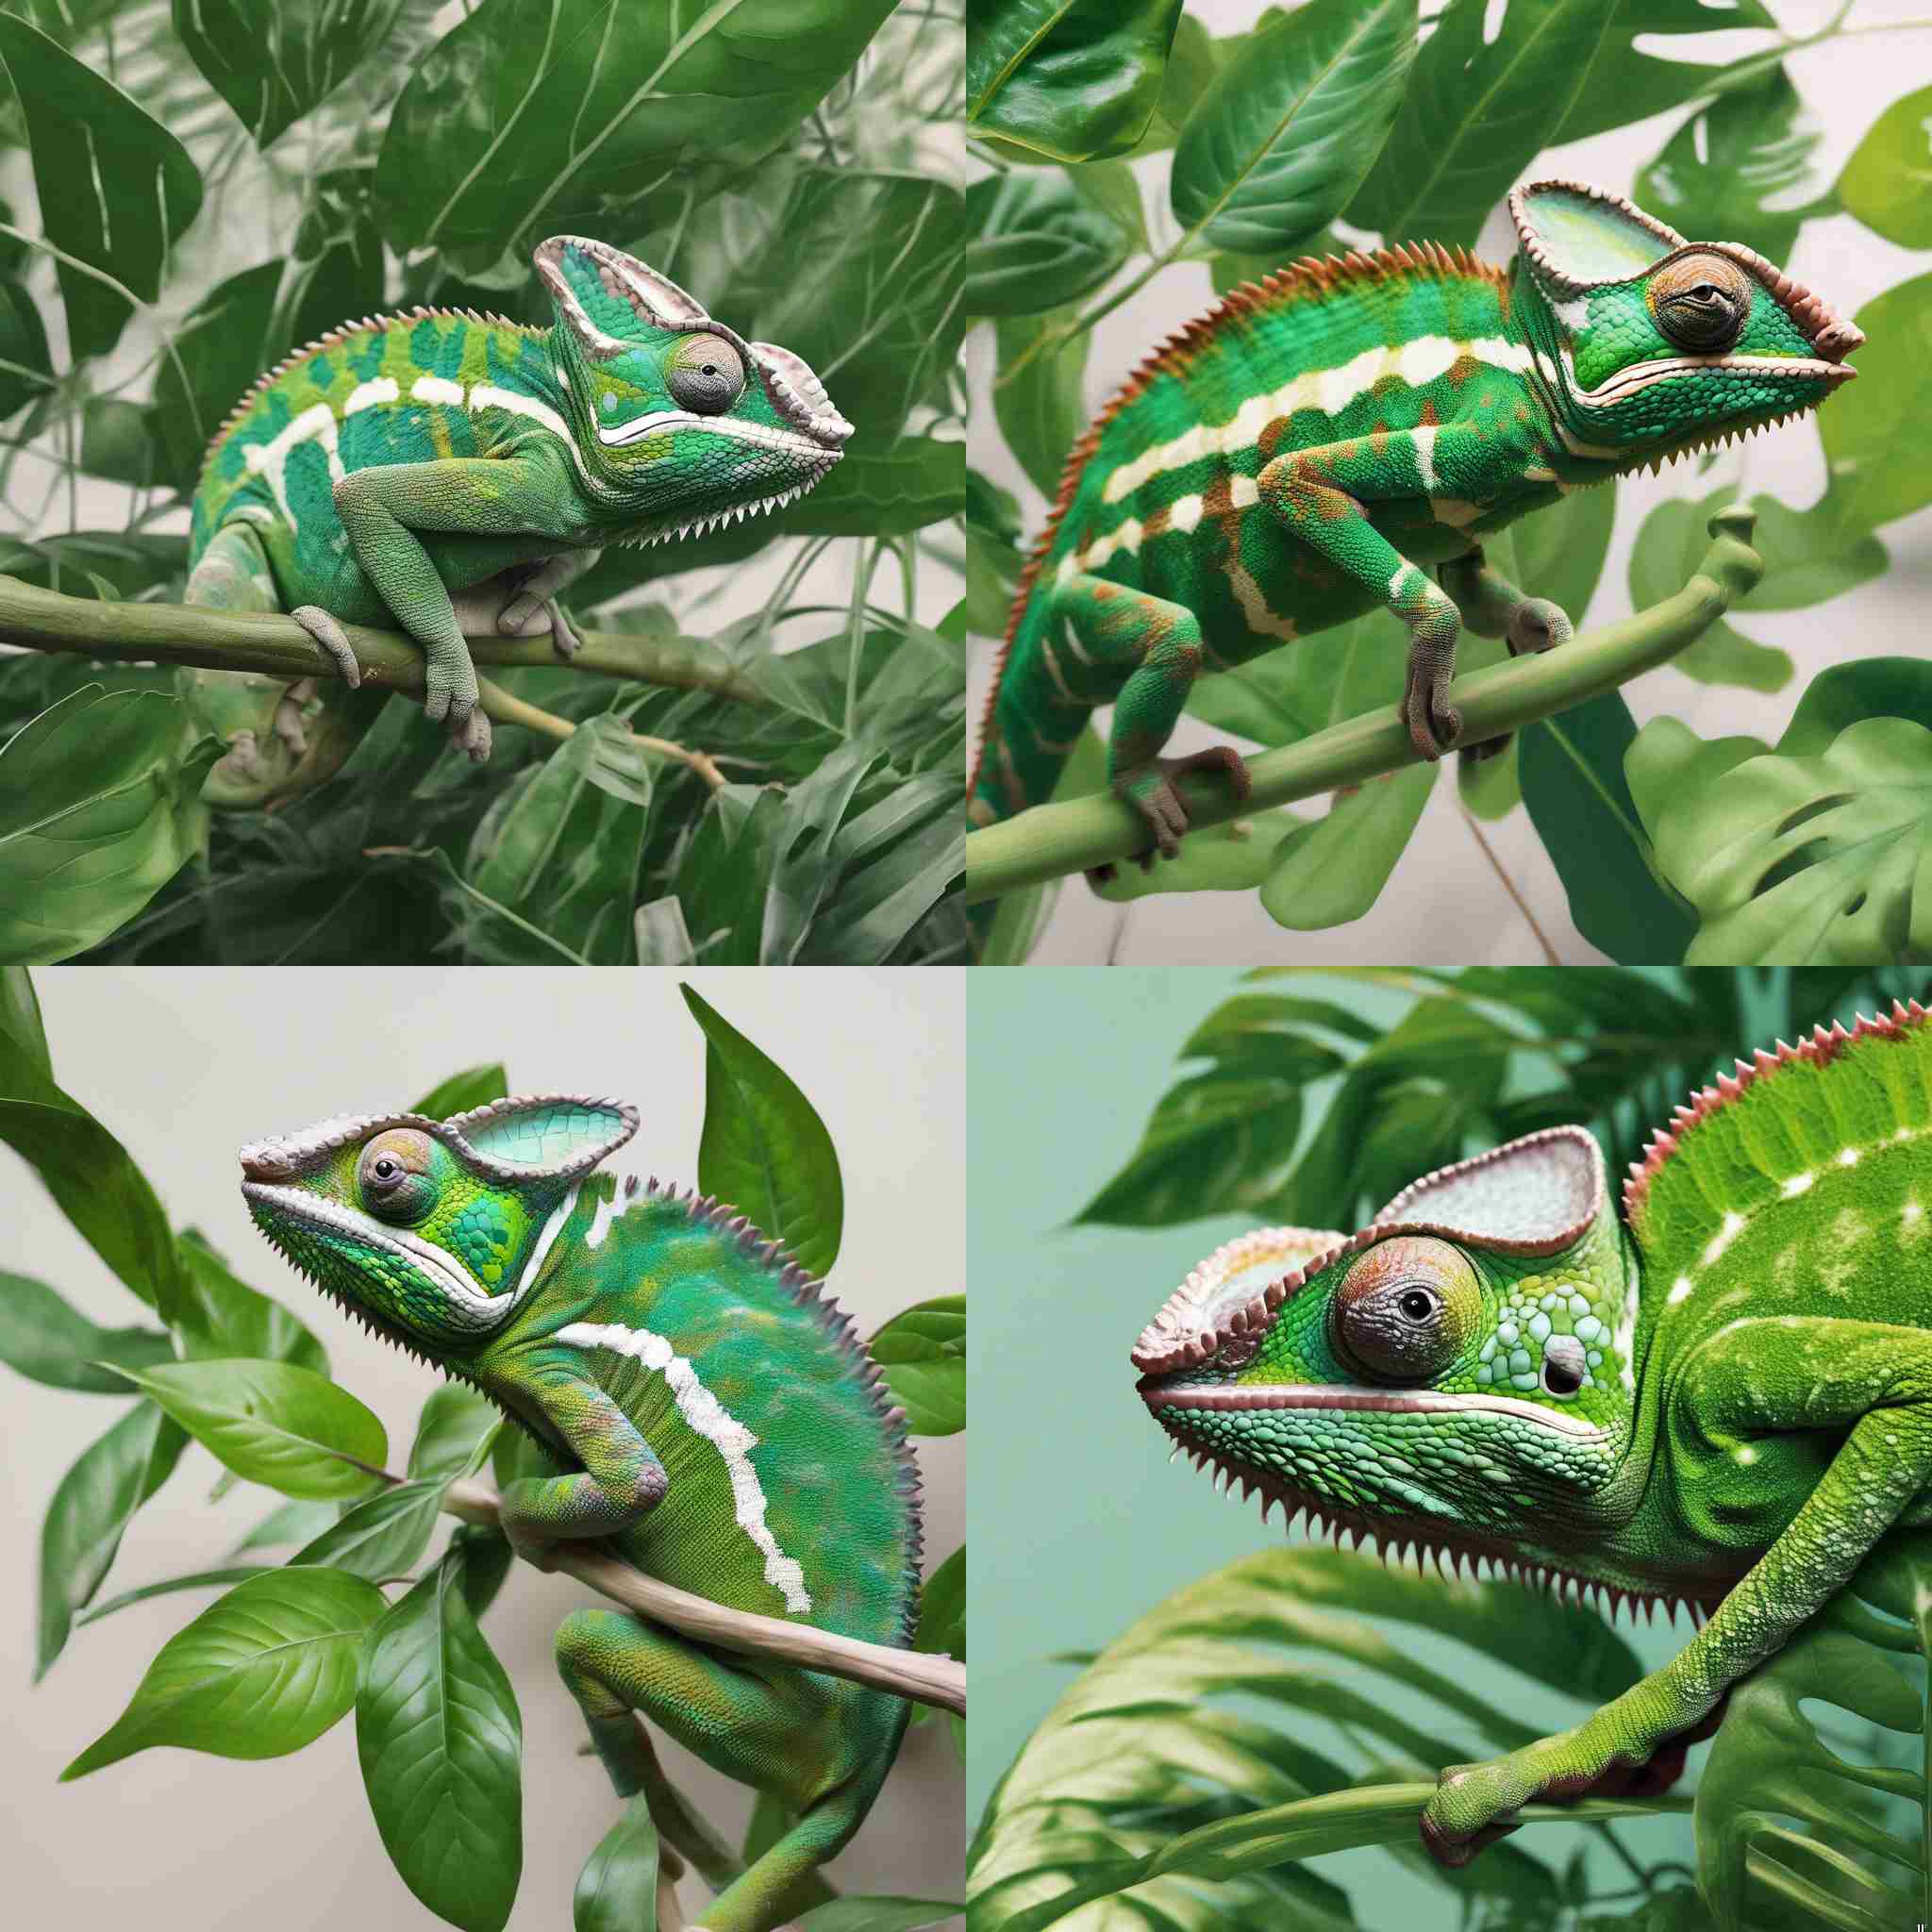 A chameleon blending in with a green leaf